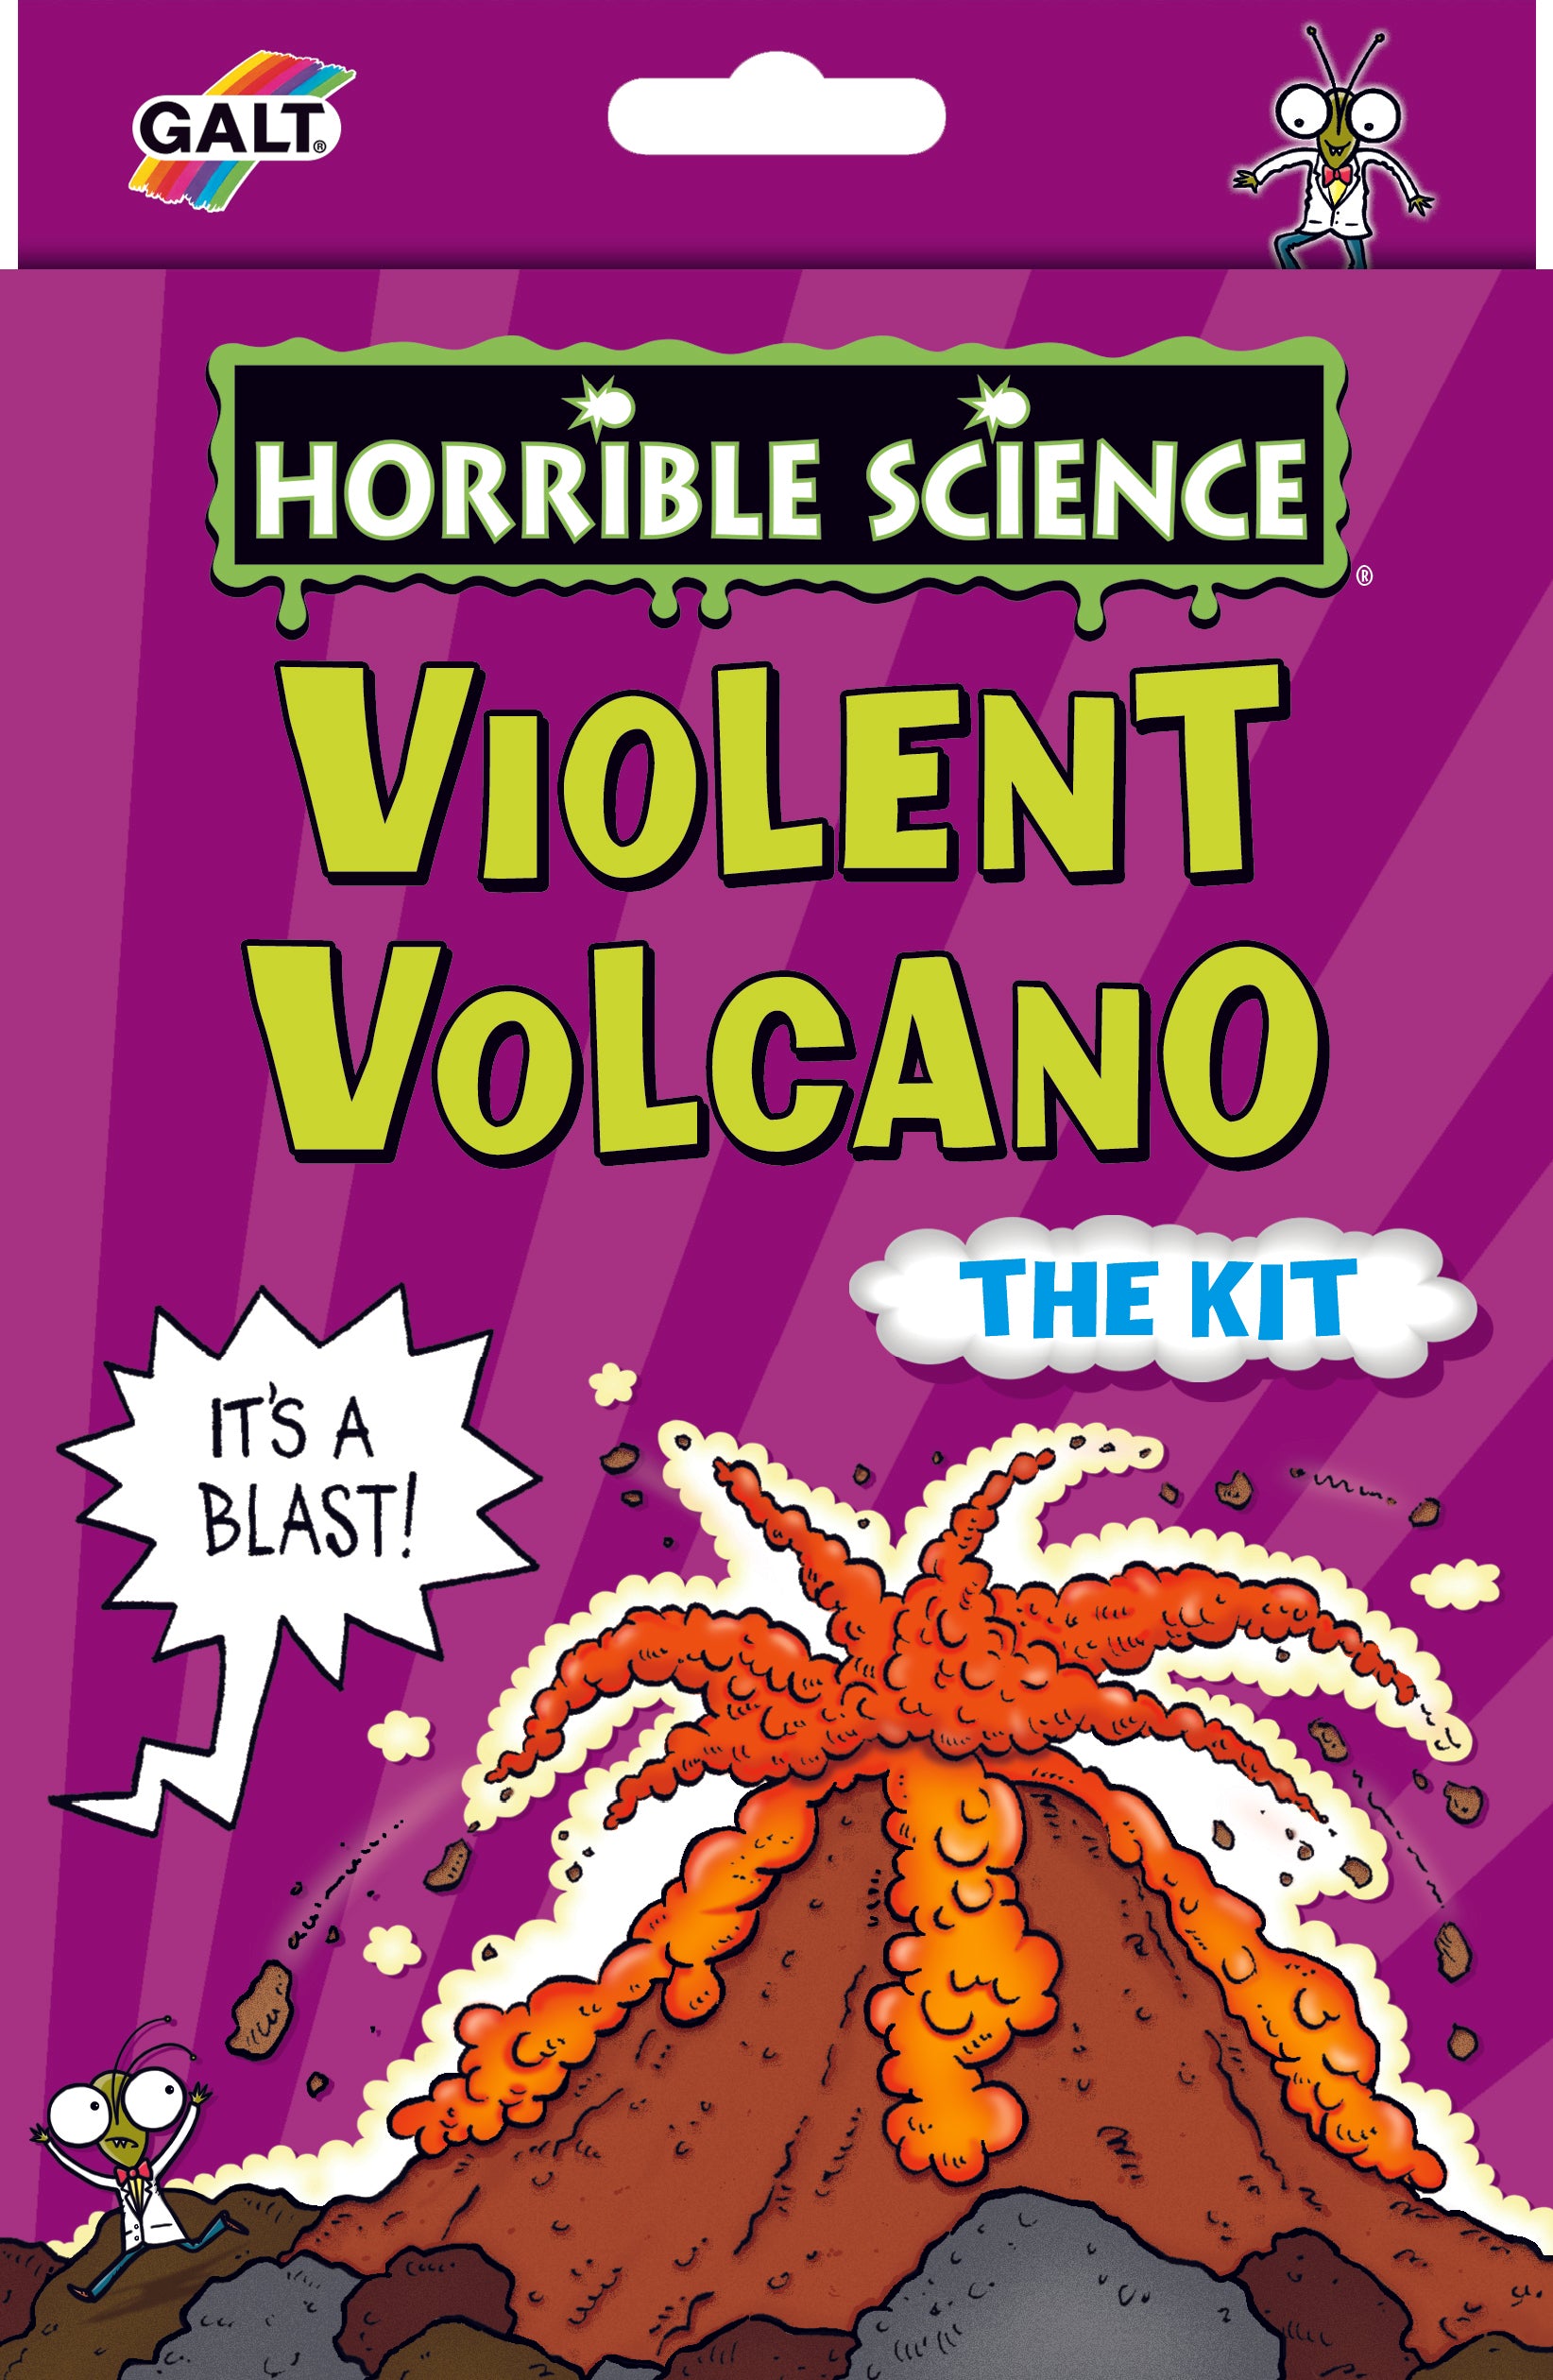 Galt - Violent Volcano